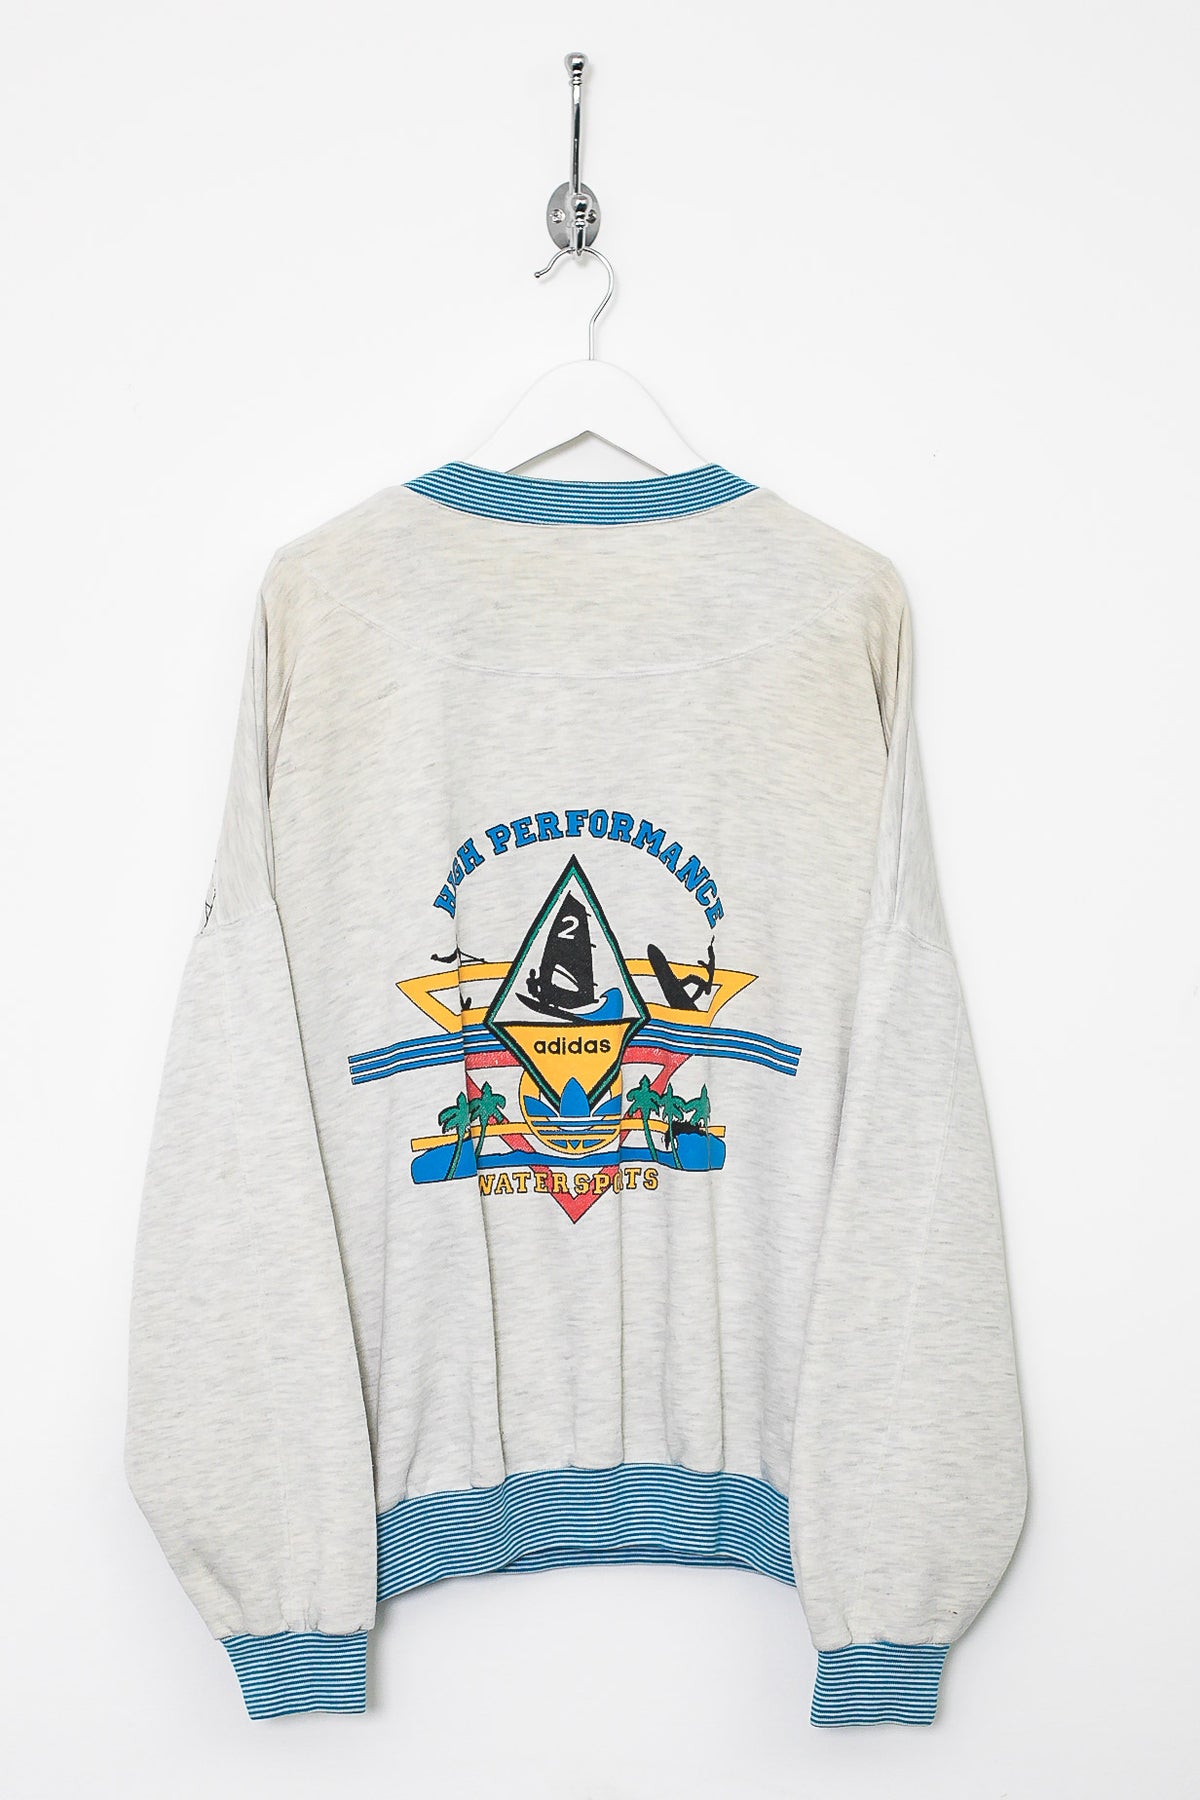 90s Adidas Watersports Sweatshirt (L)